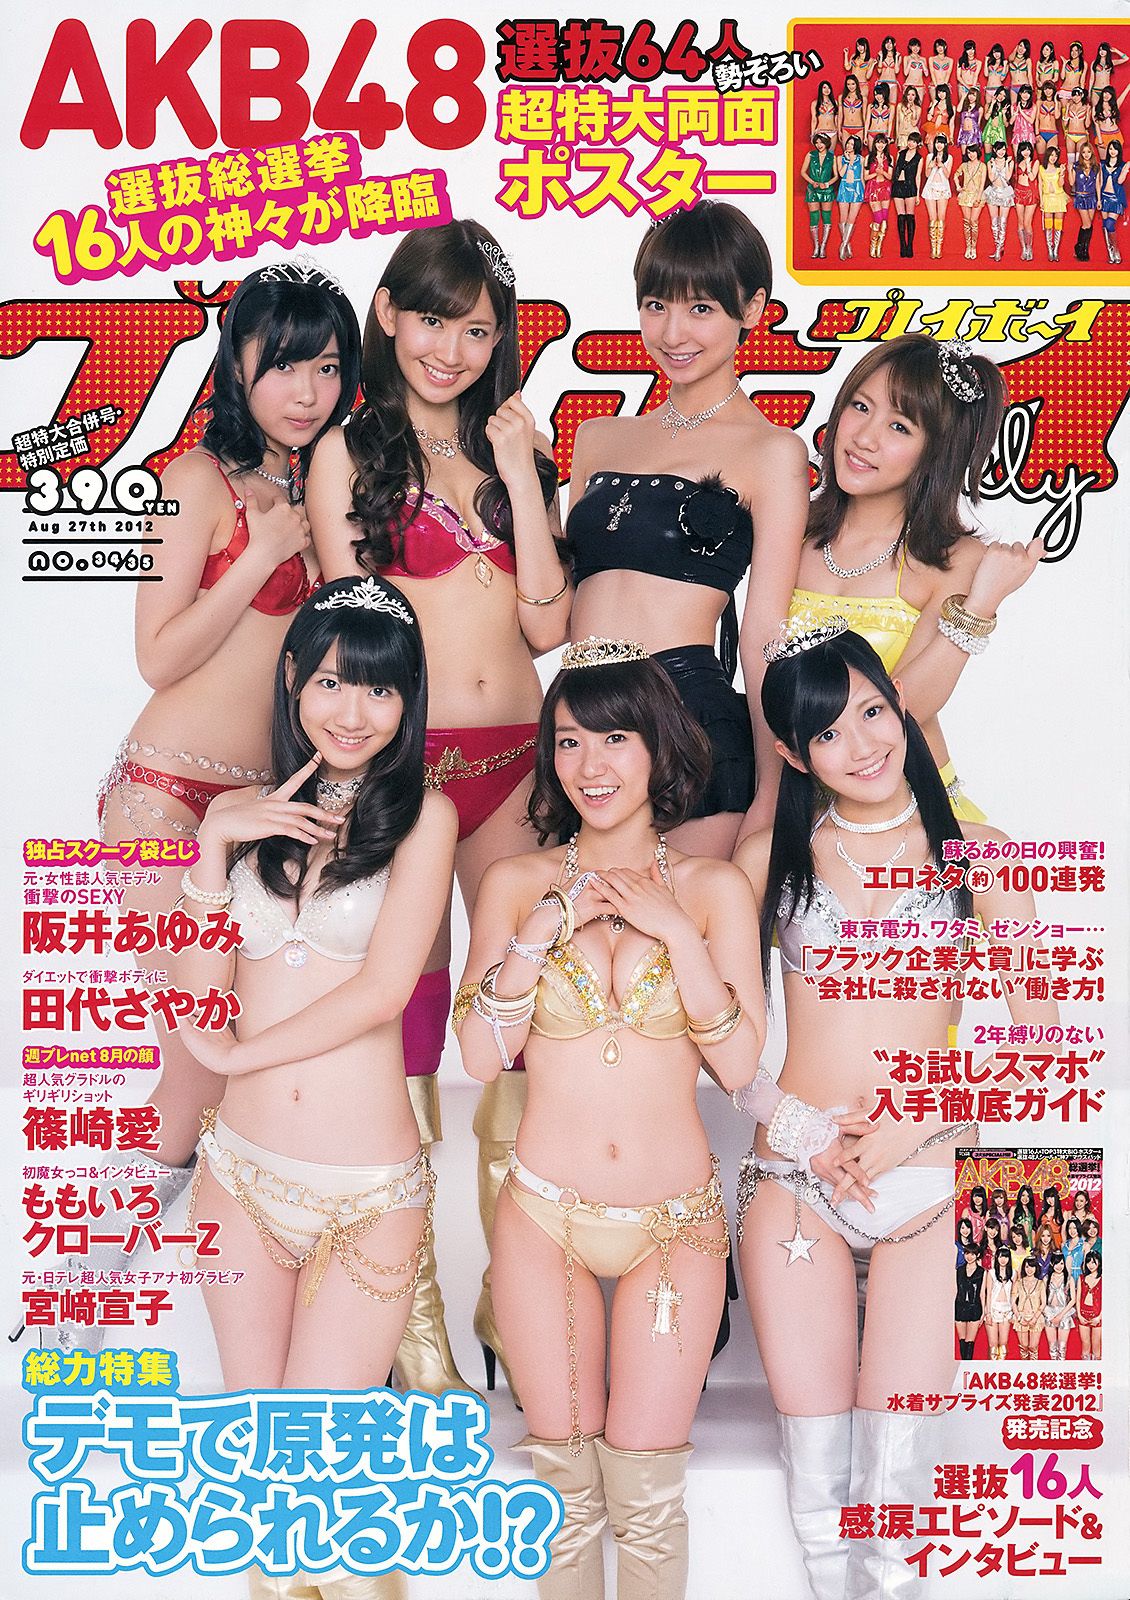 [Weekly Playboy] 2012年No.34-35 写真杂志